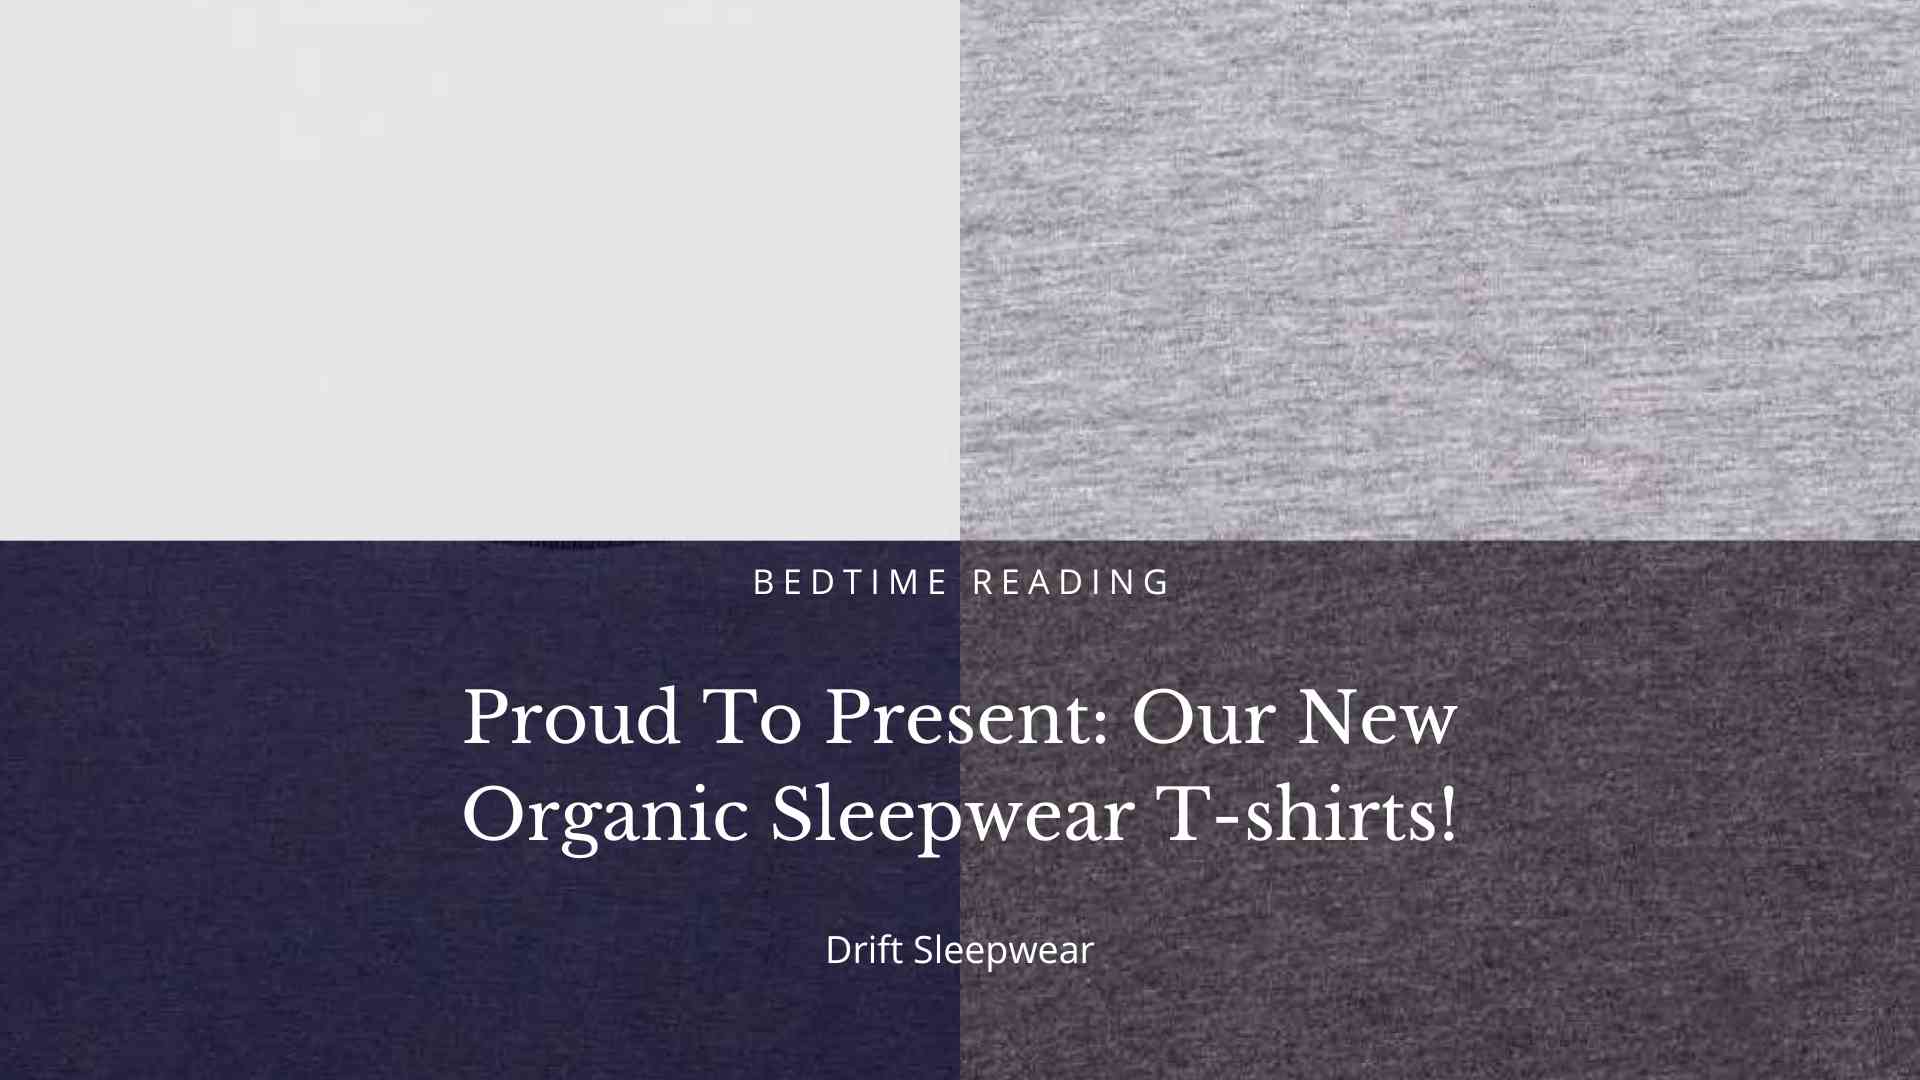 Proud To Present: Our New Organic Sleepwear T-shirts from Drift Sleepwear